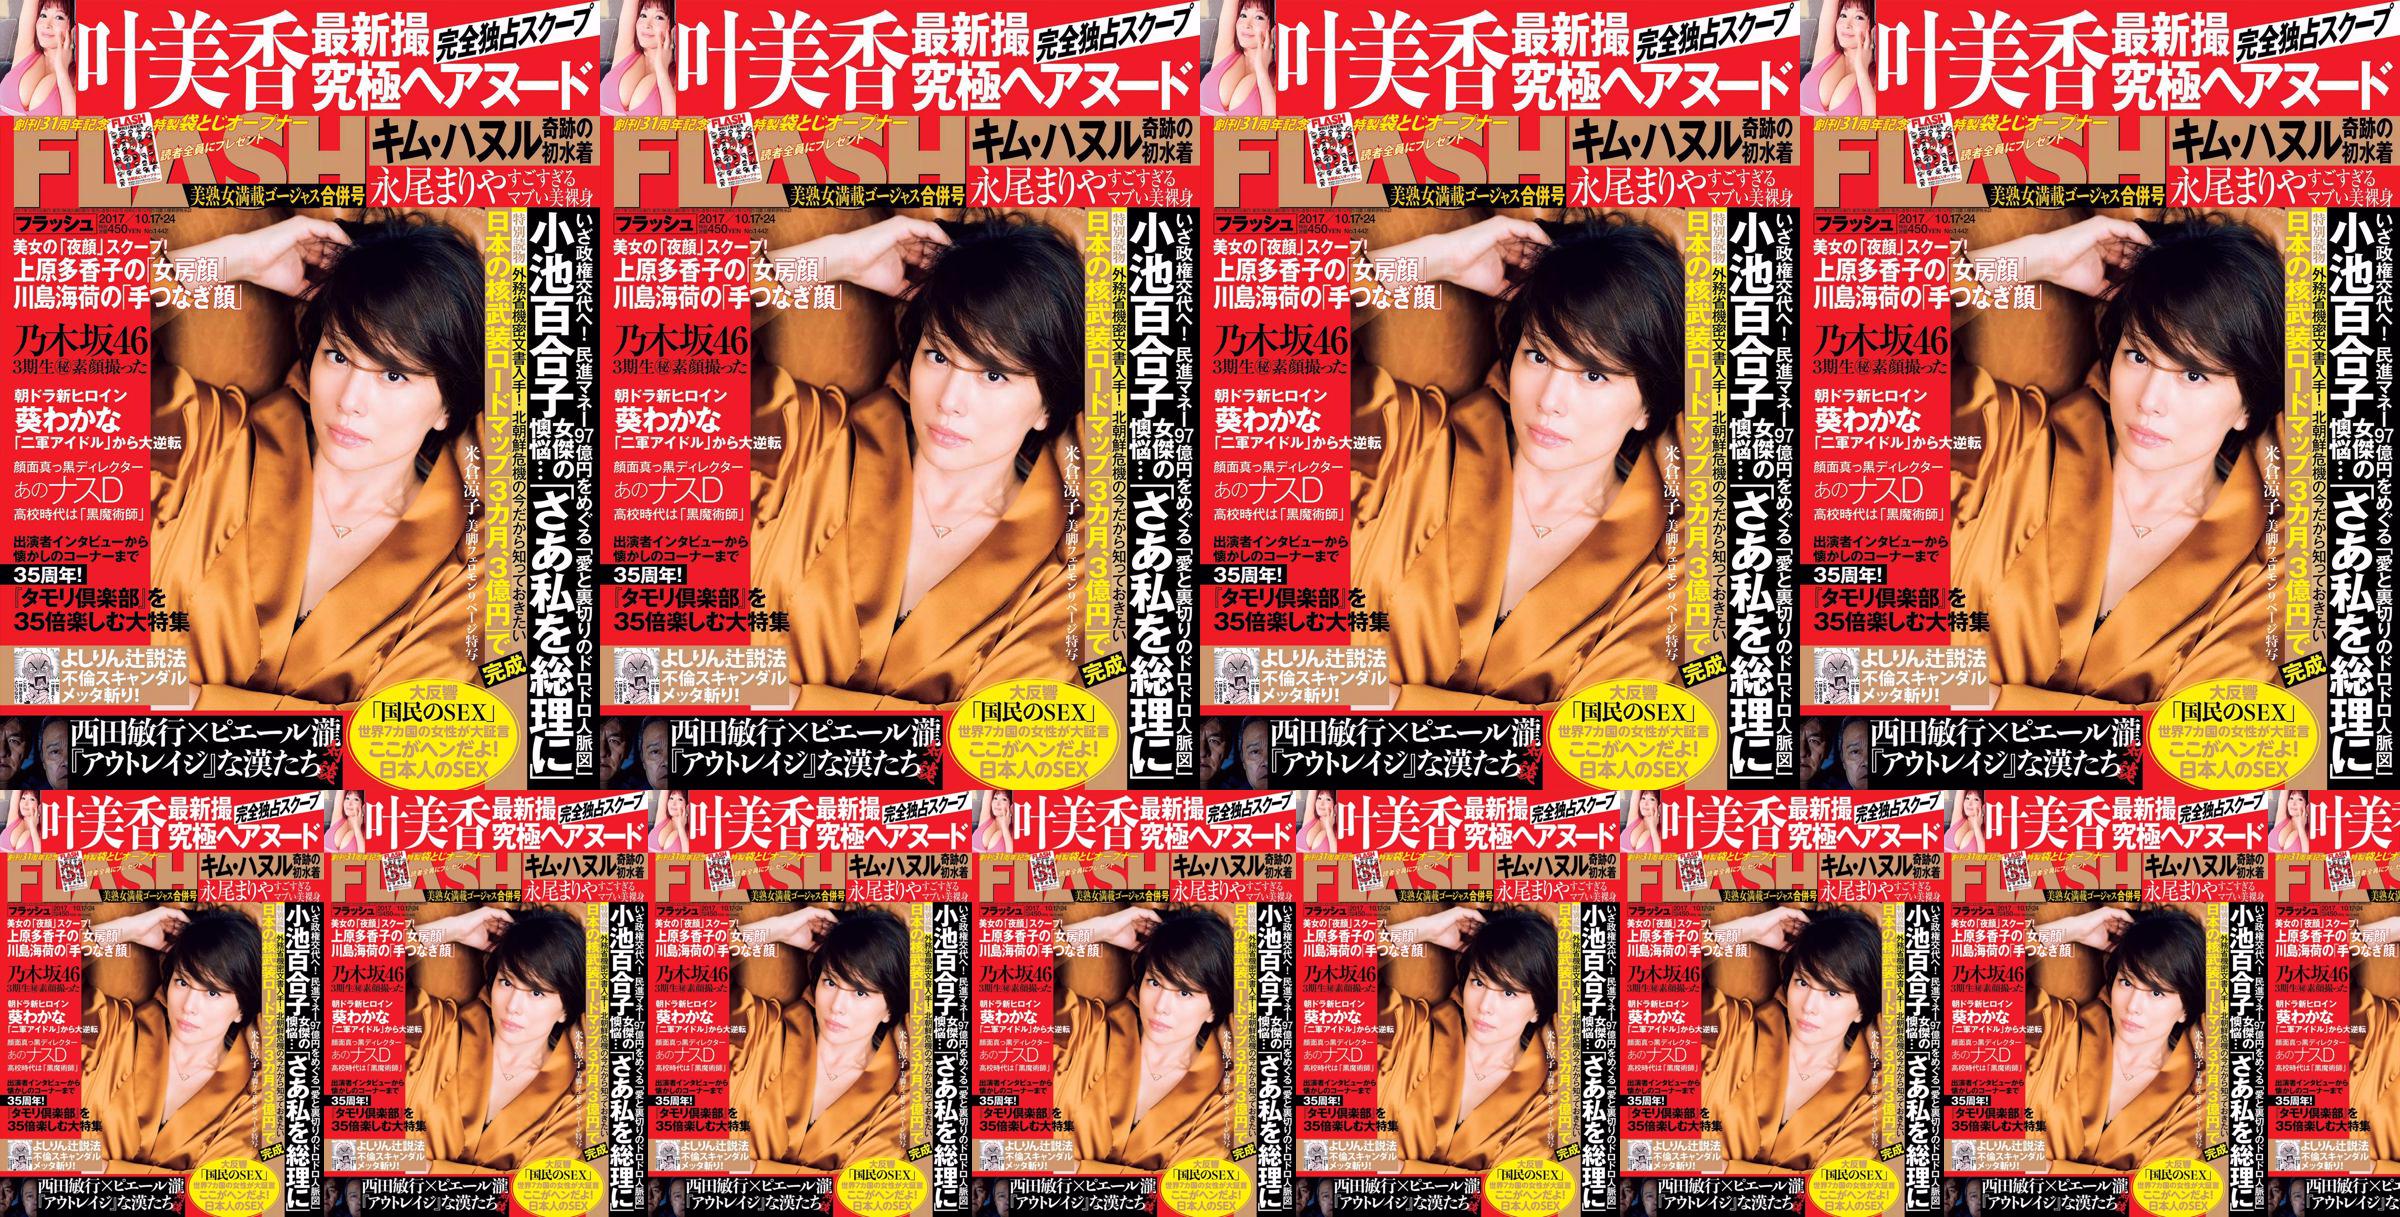 [FLASH] Yonekura Ryoko Ye Meixiang Tachibana Flower Rin Nagao Rika 2017.10.17-24 นิตยสารภาพถ่าย No.874db4 หน้า 1